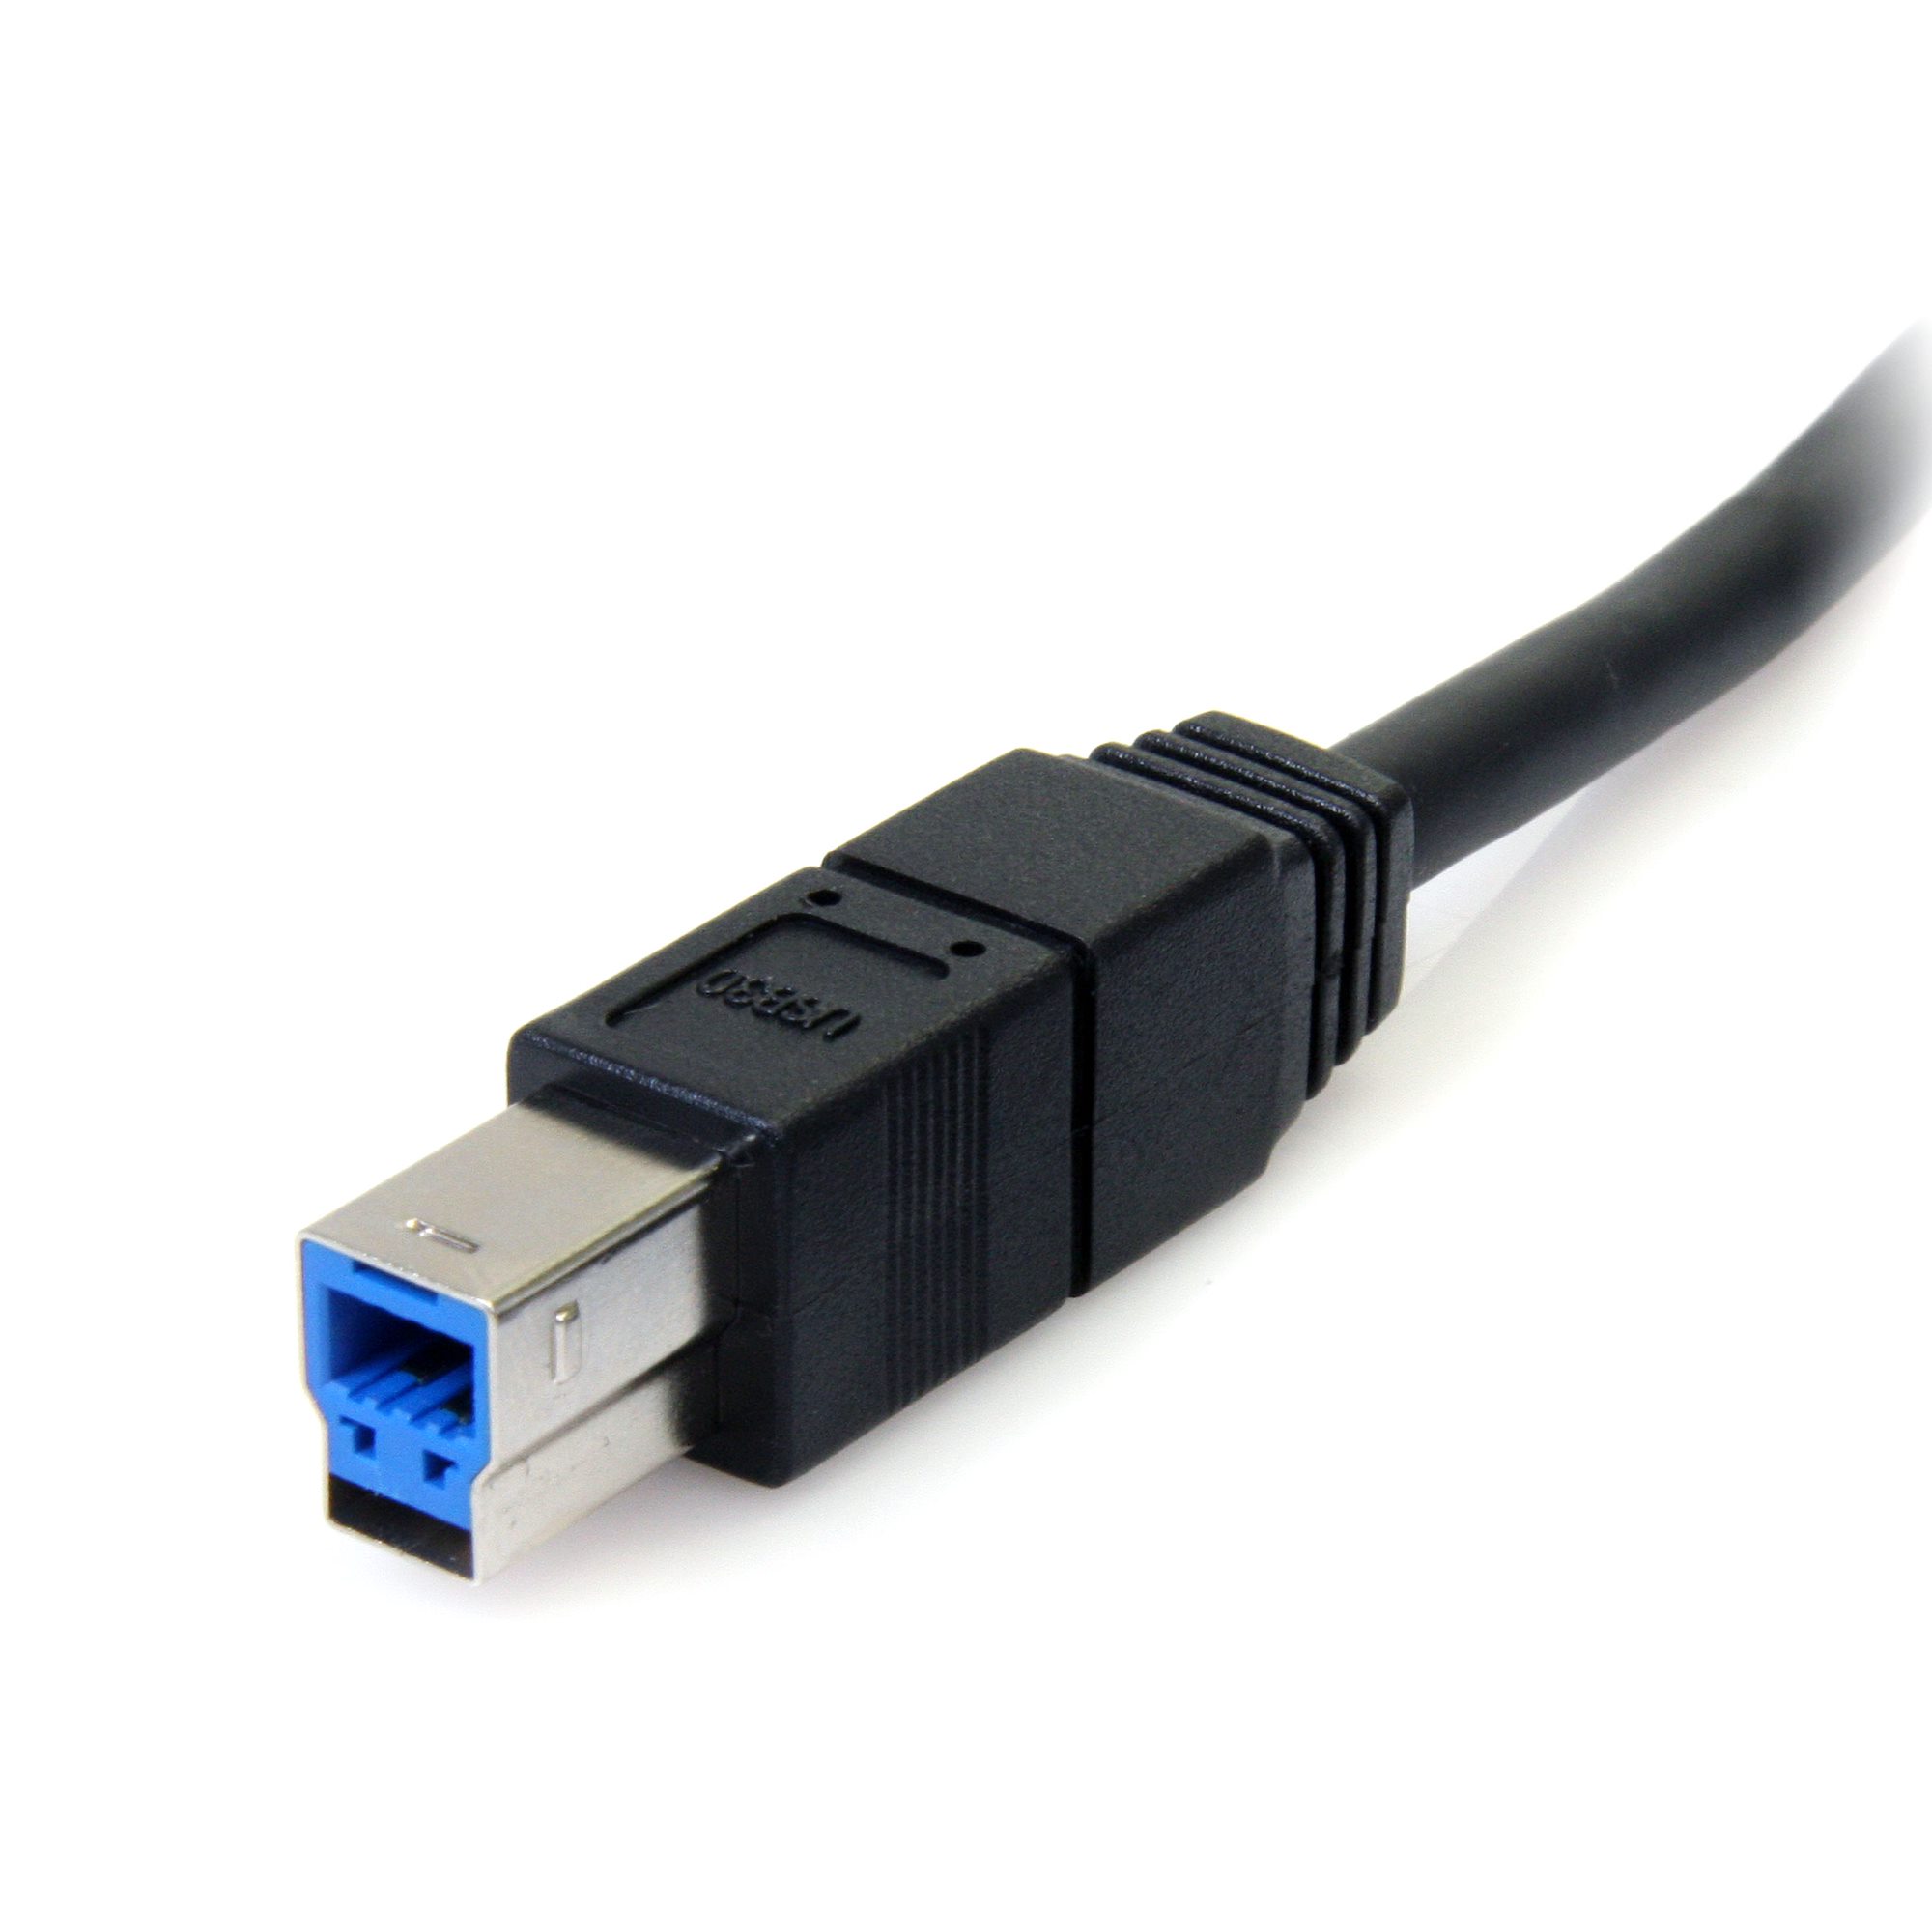 Usb 3.2 gen 1 type a. Кабель USB 3.0 Mini USB 3.0. Кабель USB 3.0 SUPERSPEED USB 3.0. Кабель USB 3.0 SUPERSPEED USB 3.0 19 Pin.